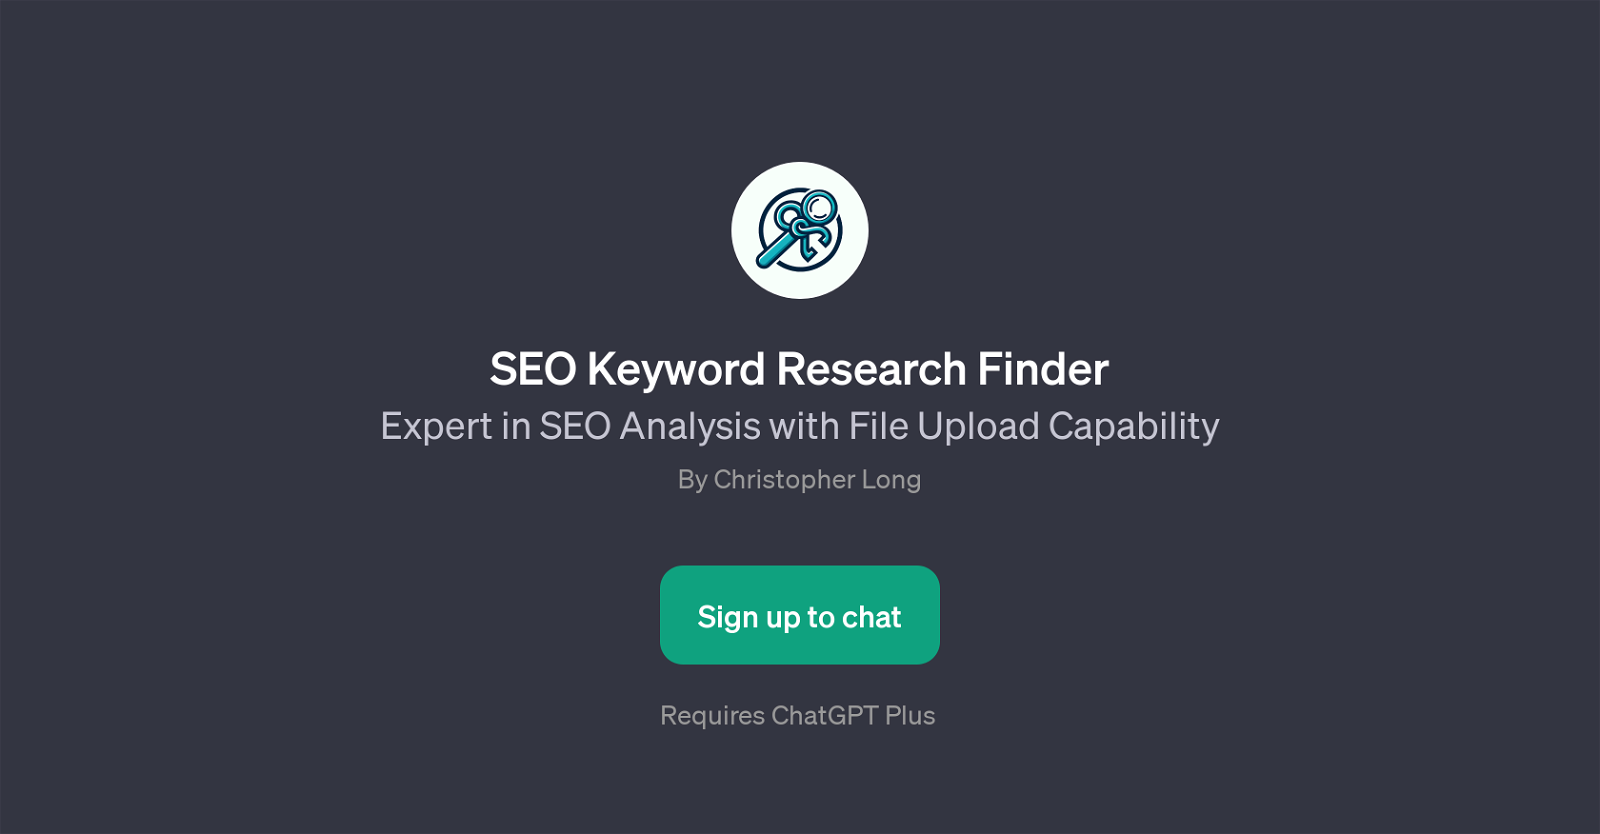 SEO Keyword Research Finder website